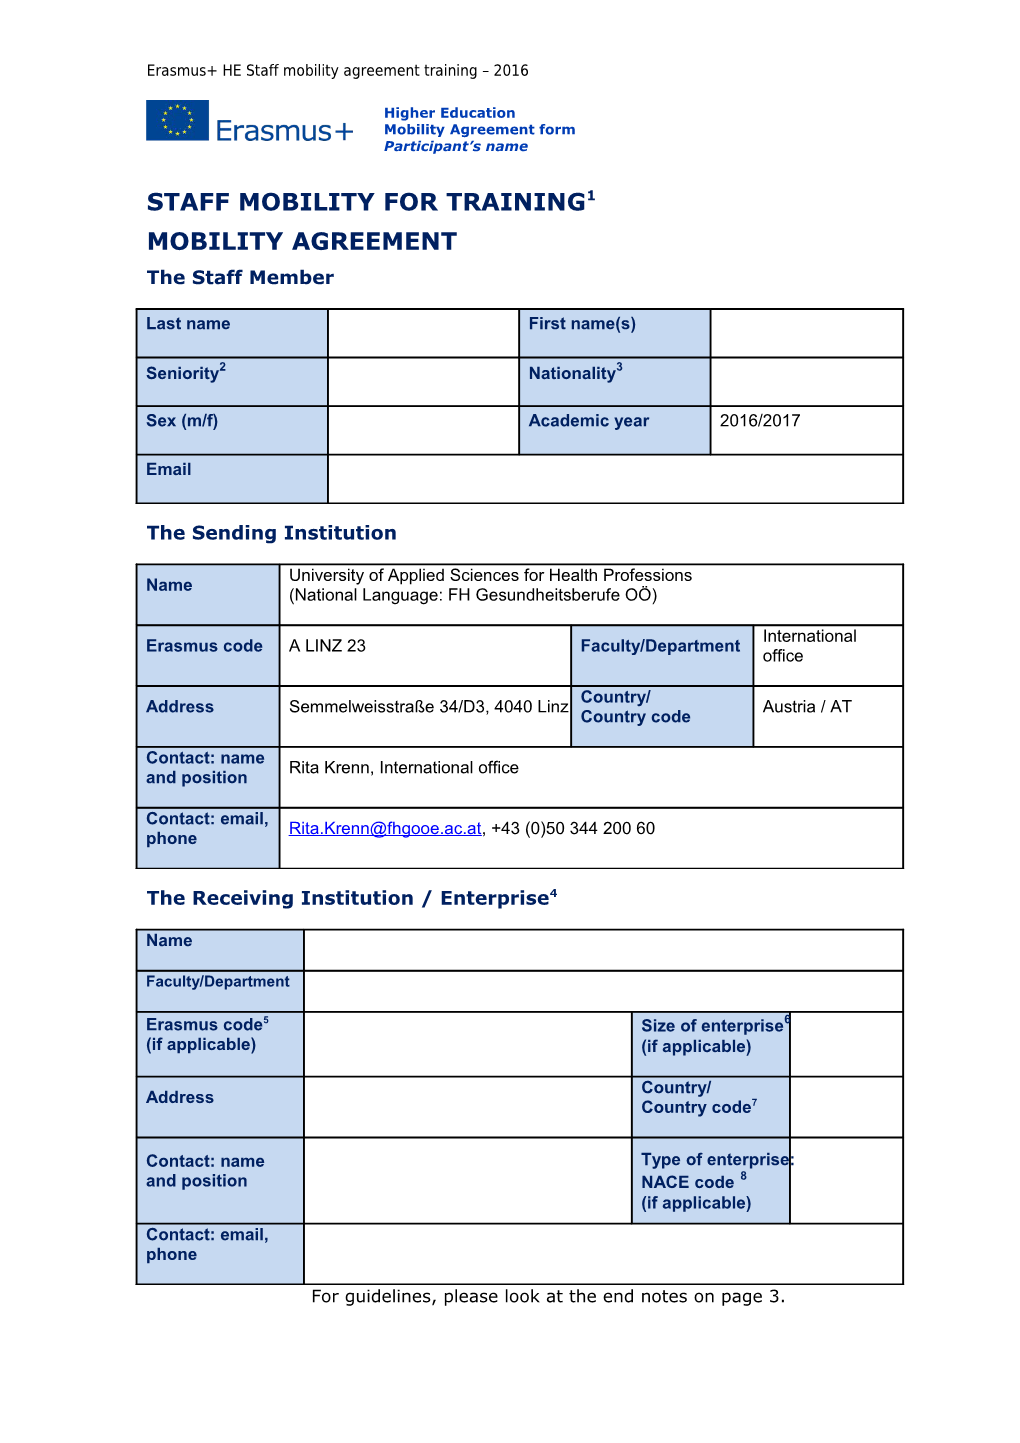 Erasmus+ HE Staff Mobility Agreement Training 2016